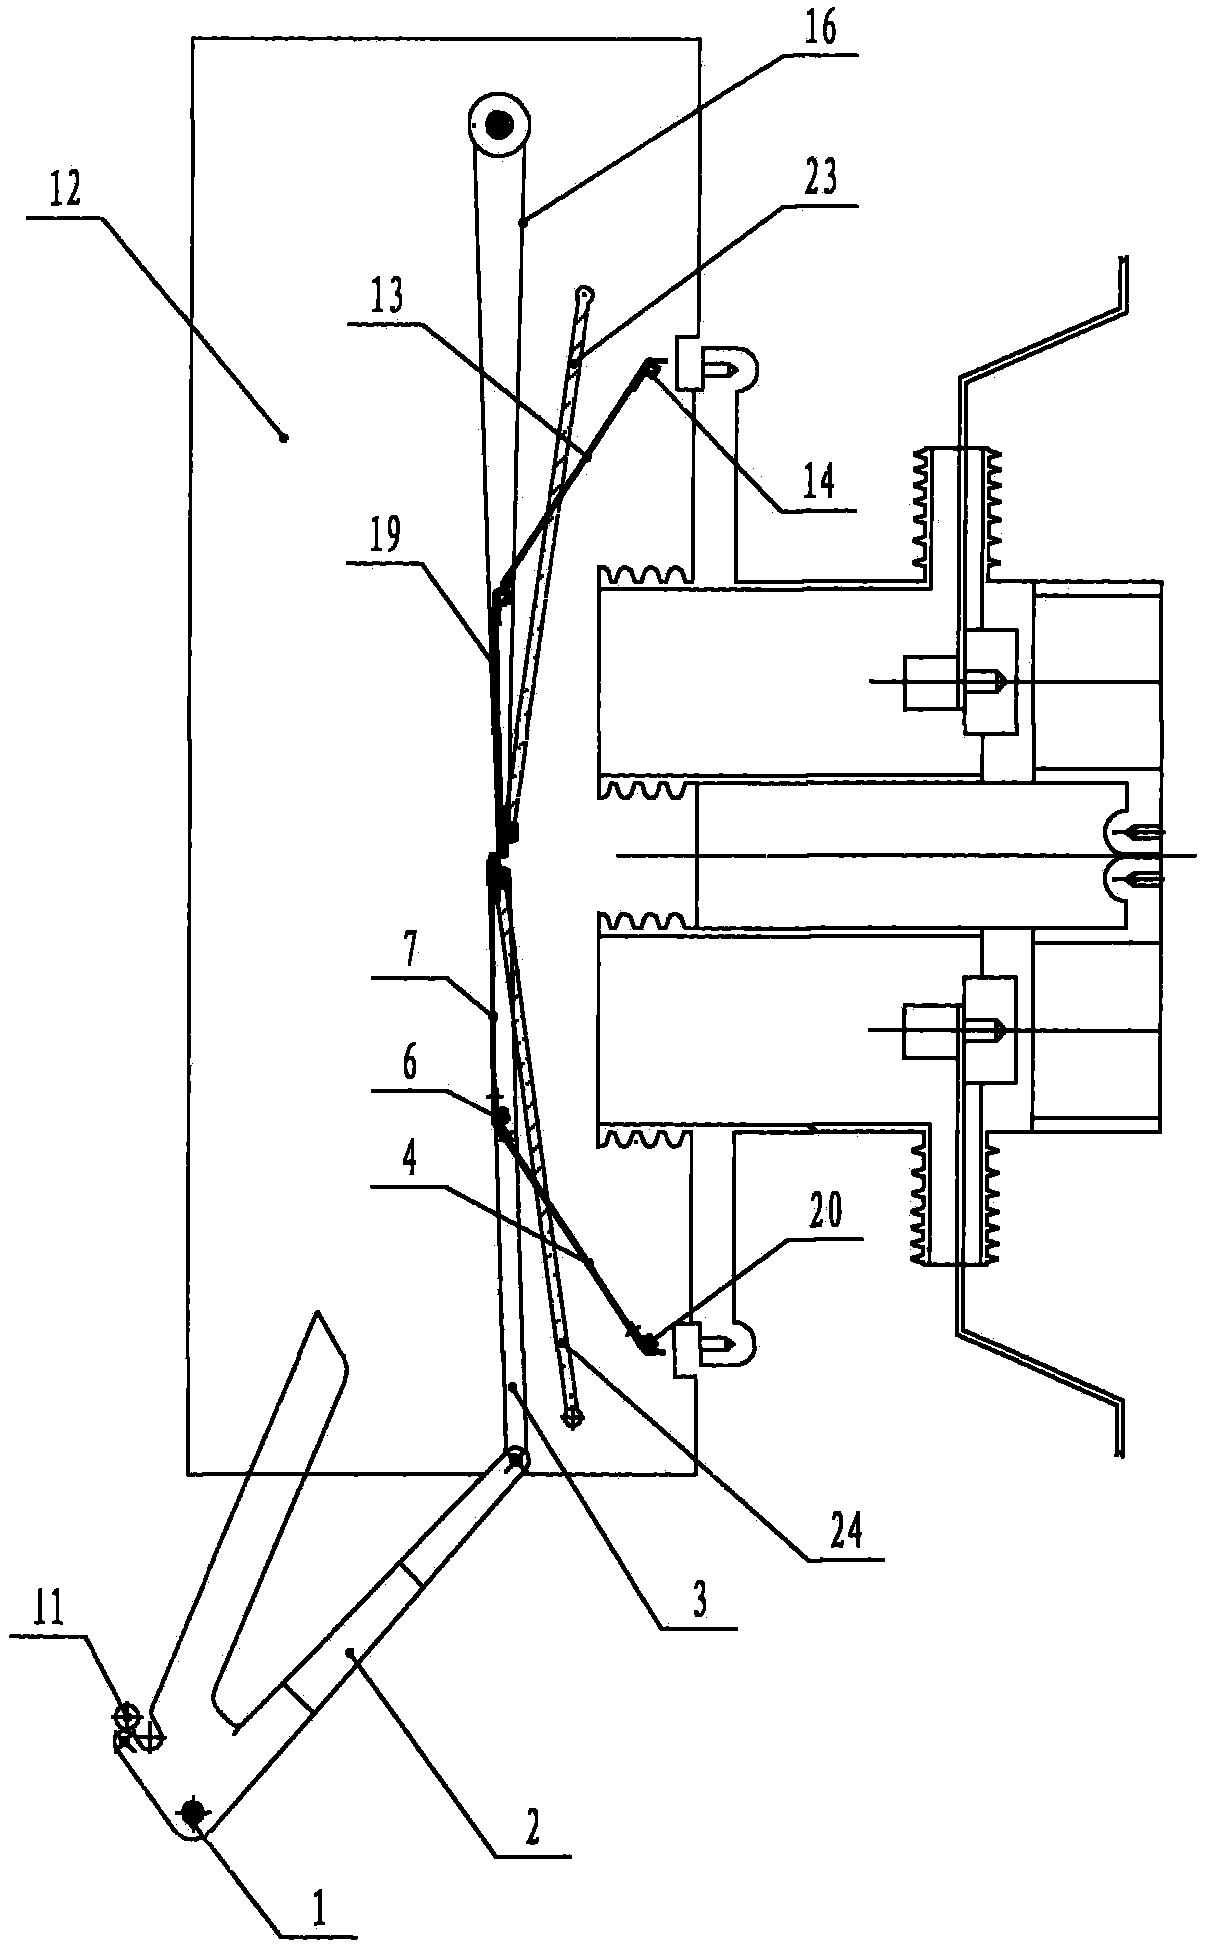 Switch cabinet valve mechanism